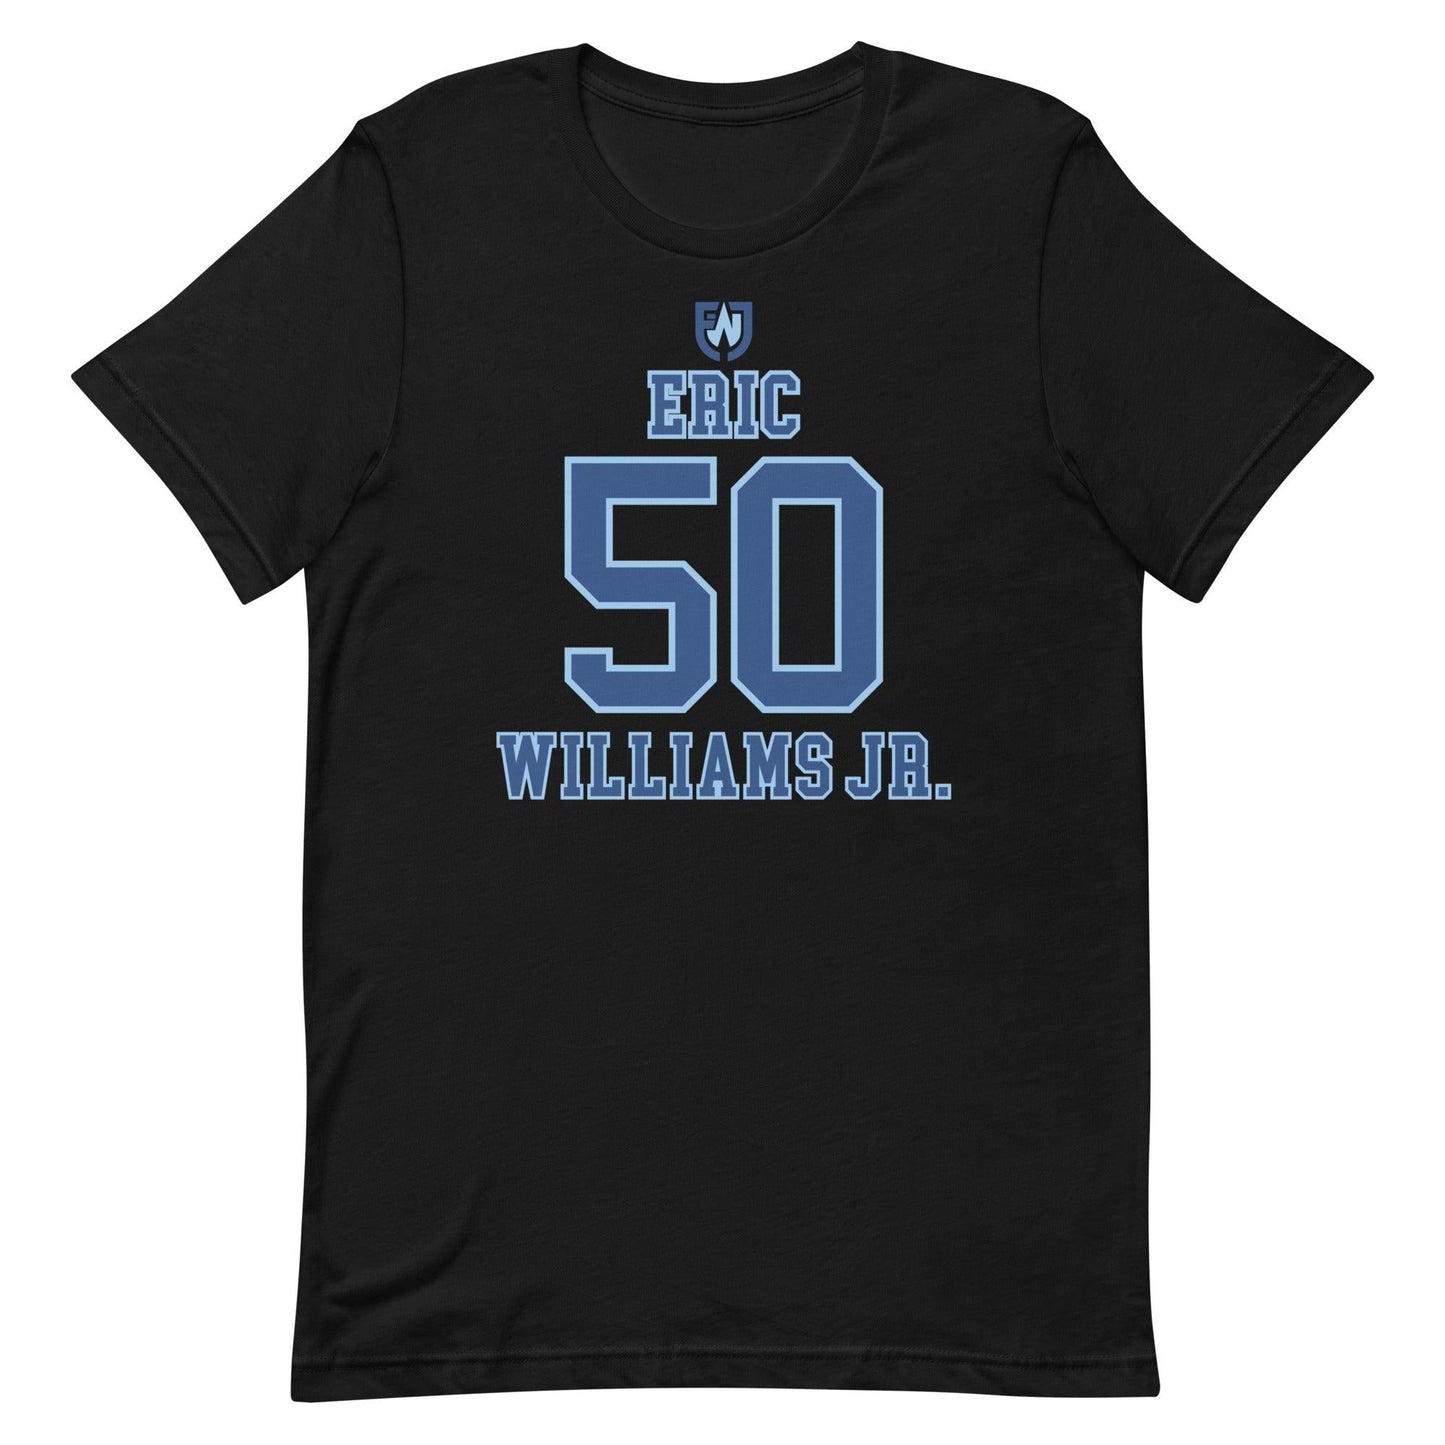 Eric Williams Jr. "Jersey" t-shirt - Fan Arch